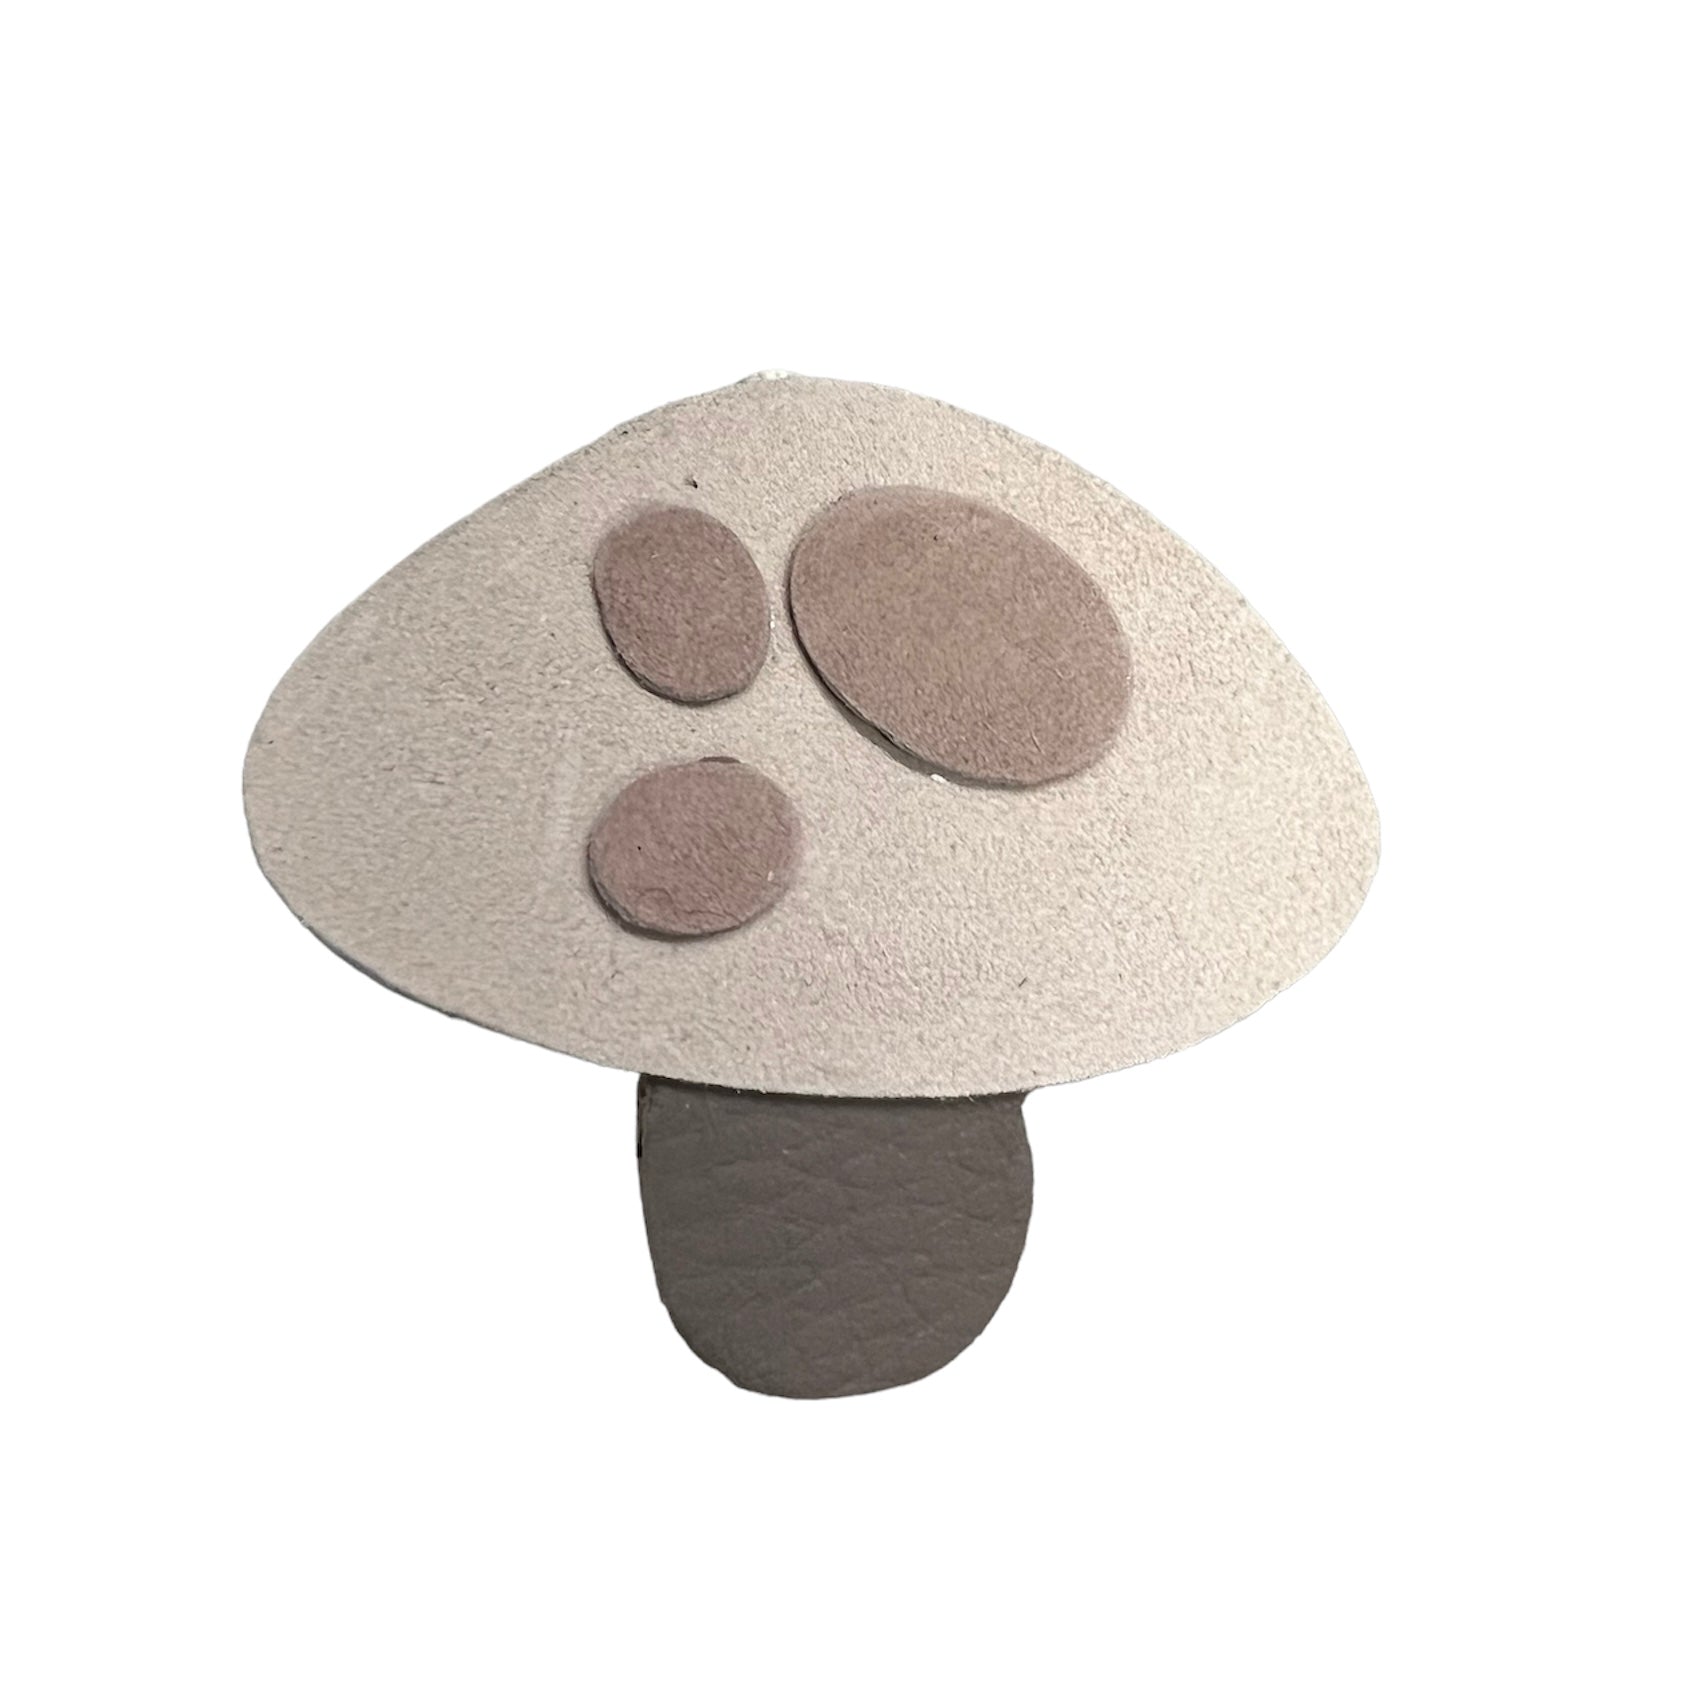 Mushroom hairclip